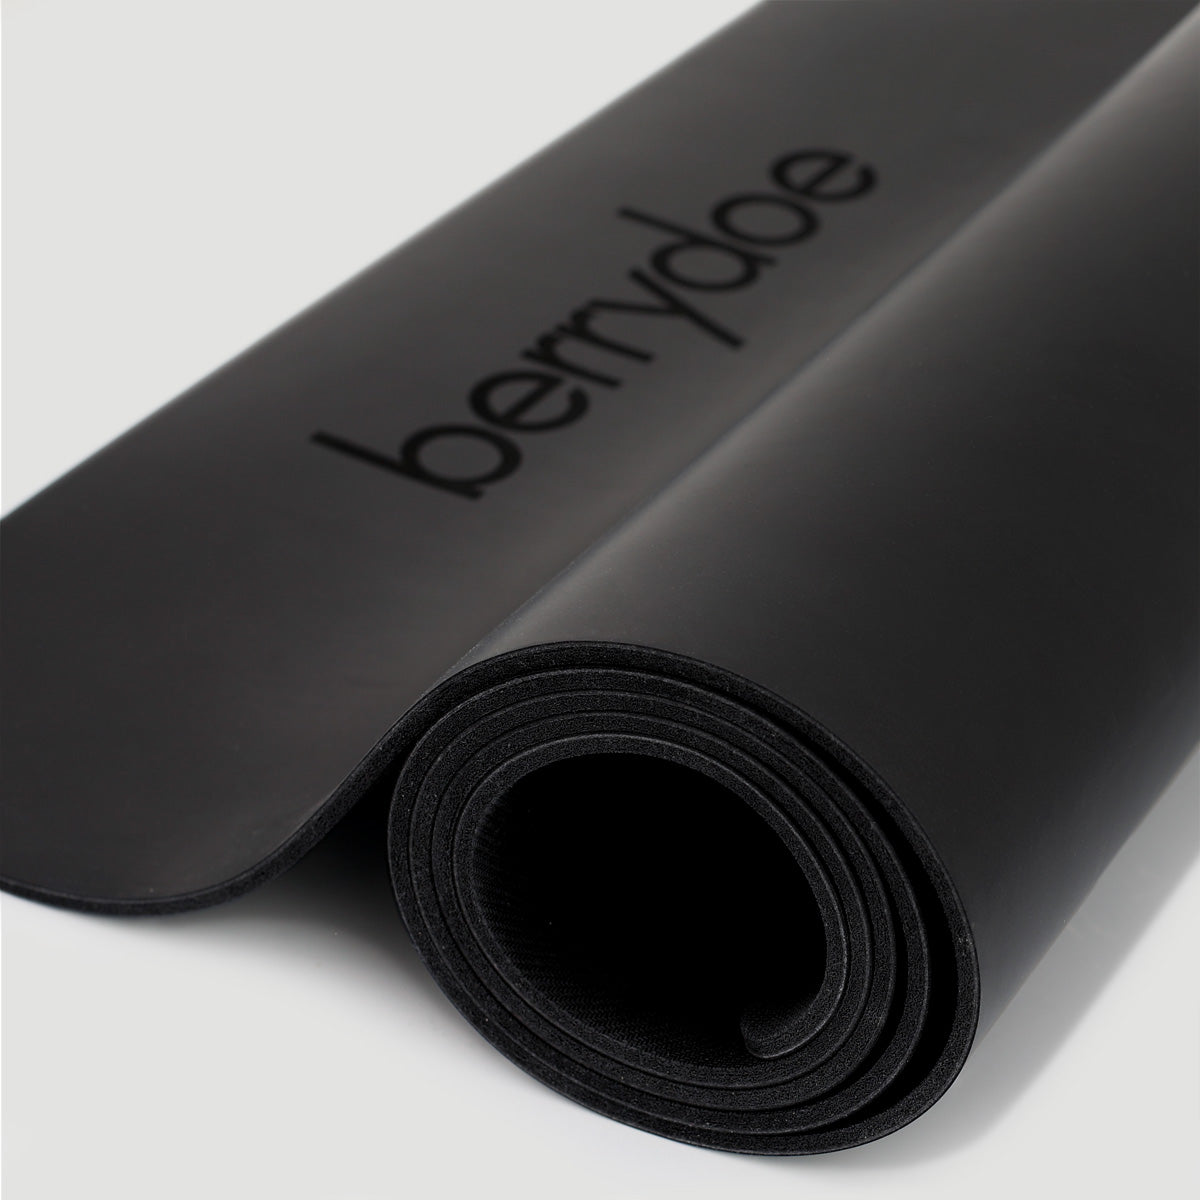 Anti-slip thick exercise mat – berrydoe